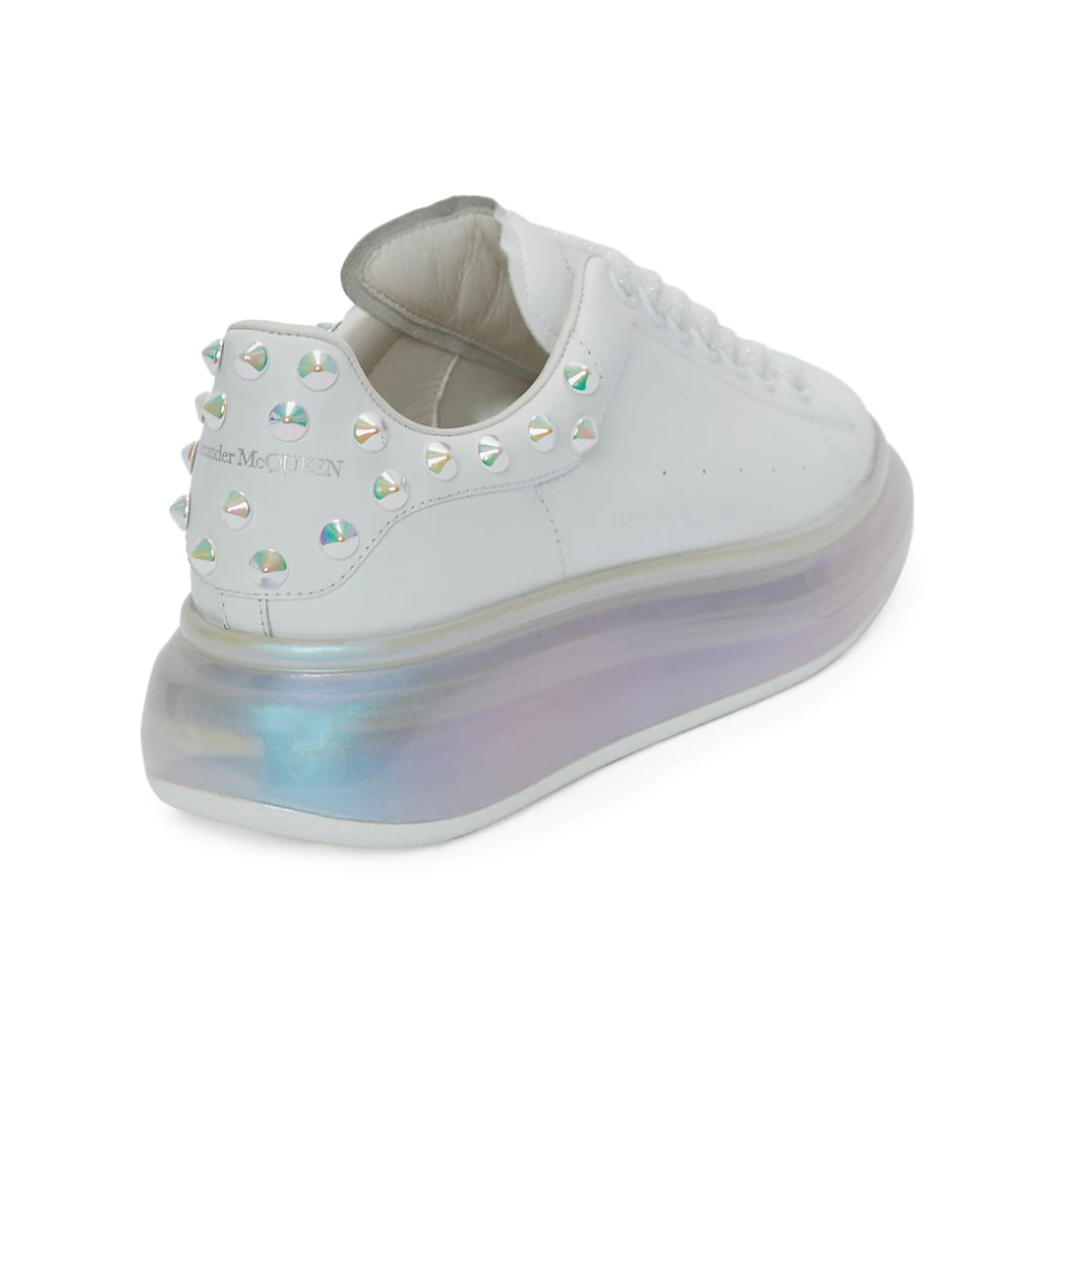 Alexander McQueen Clear-Sole Women's Sneakers Size 9 US / 39 EU White  Iridescent | eBay